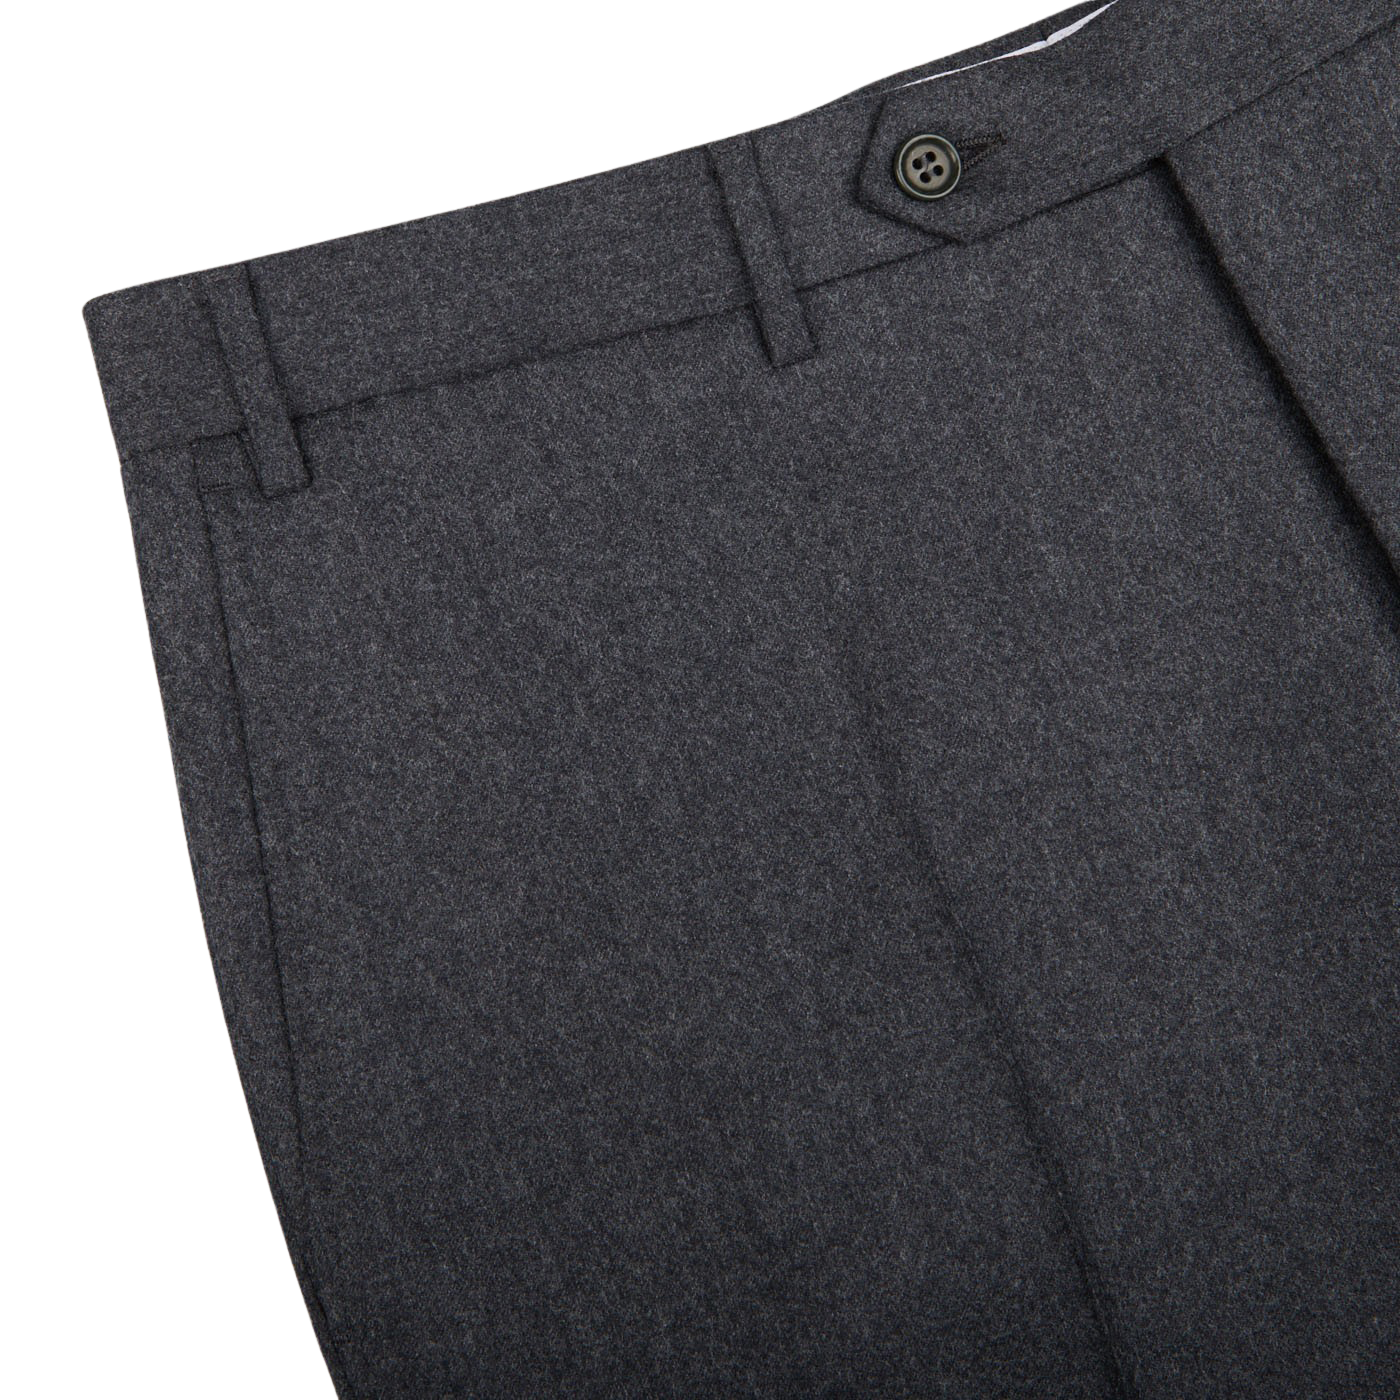 Canali - gallery image 1 showcases a men's structured shoulder Grey Melange Wool Flannel Suit.